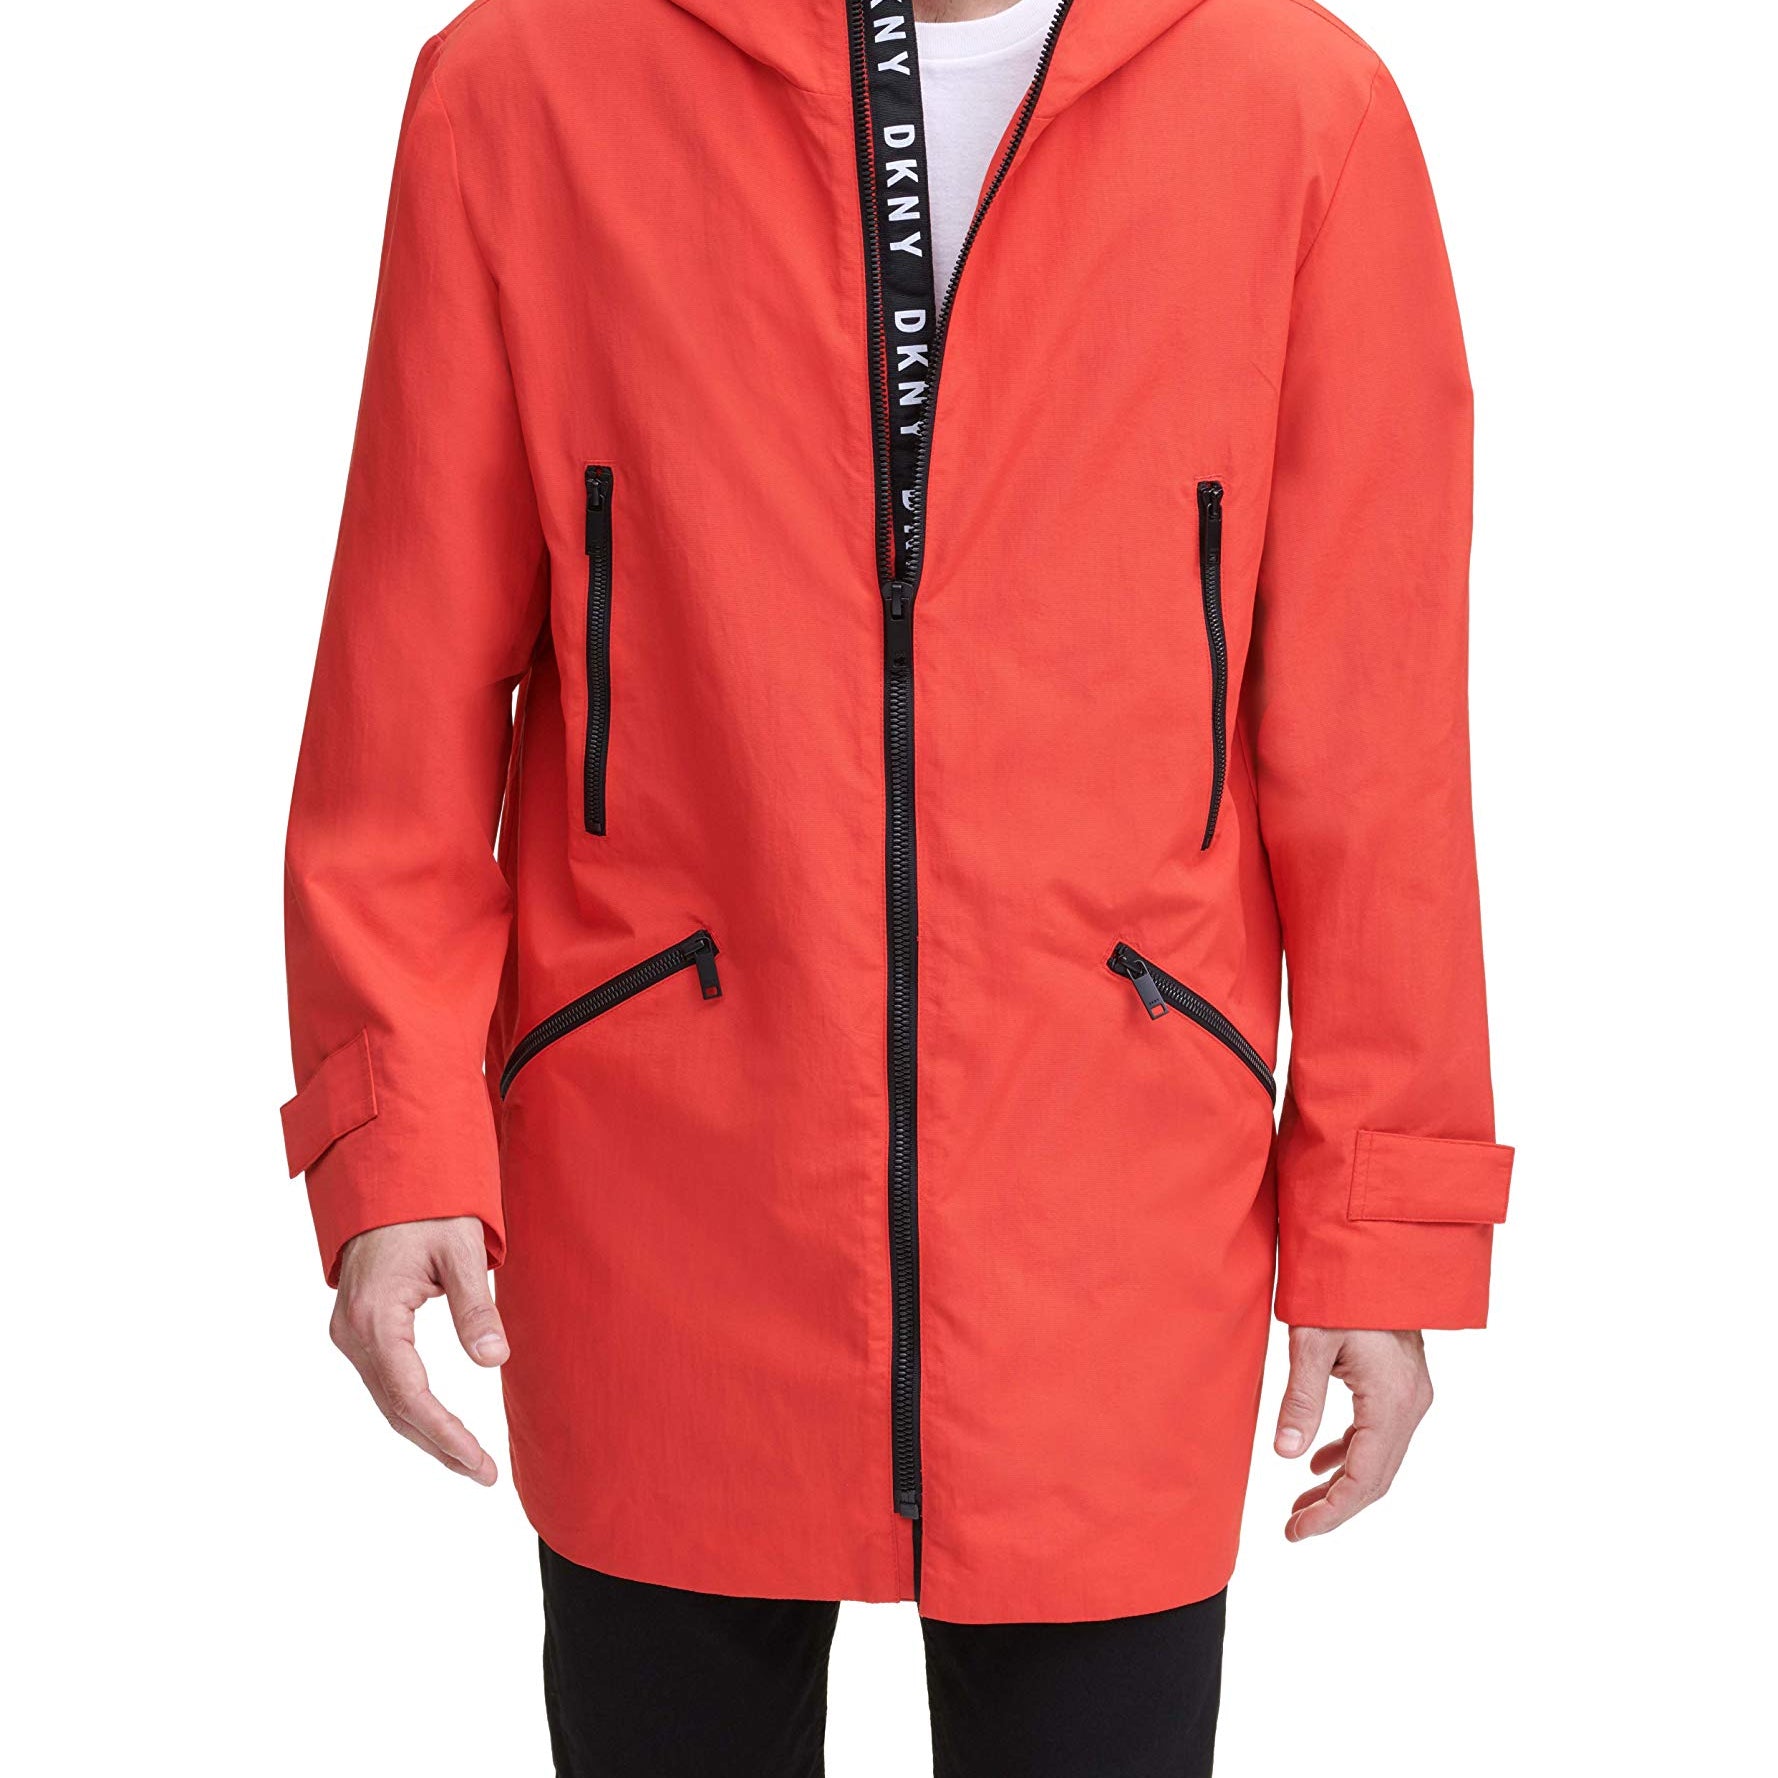 DKNY Men's Midlength Hooded Taslan Parka Jacket